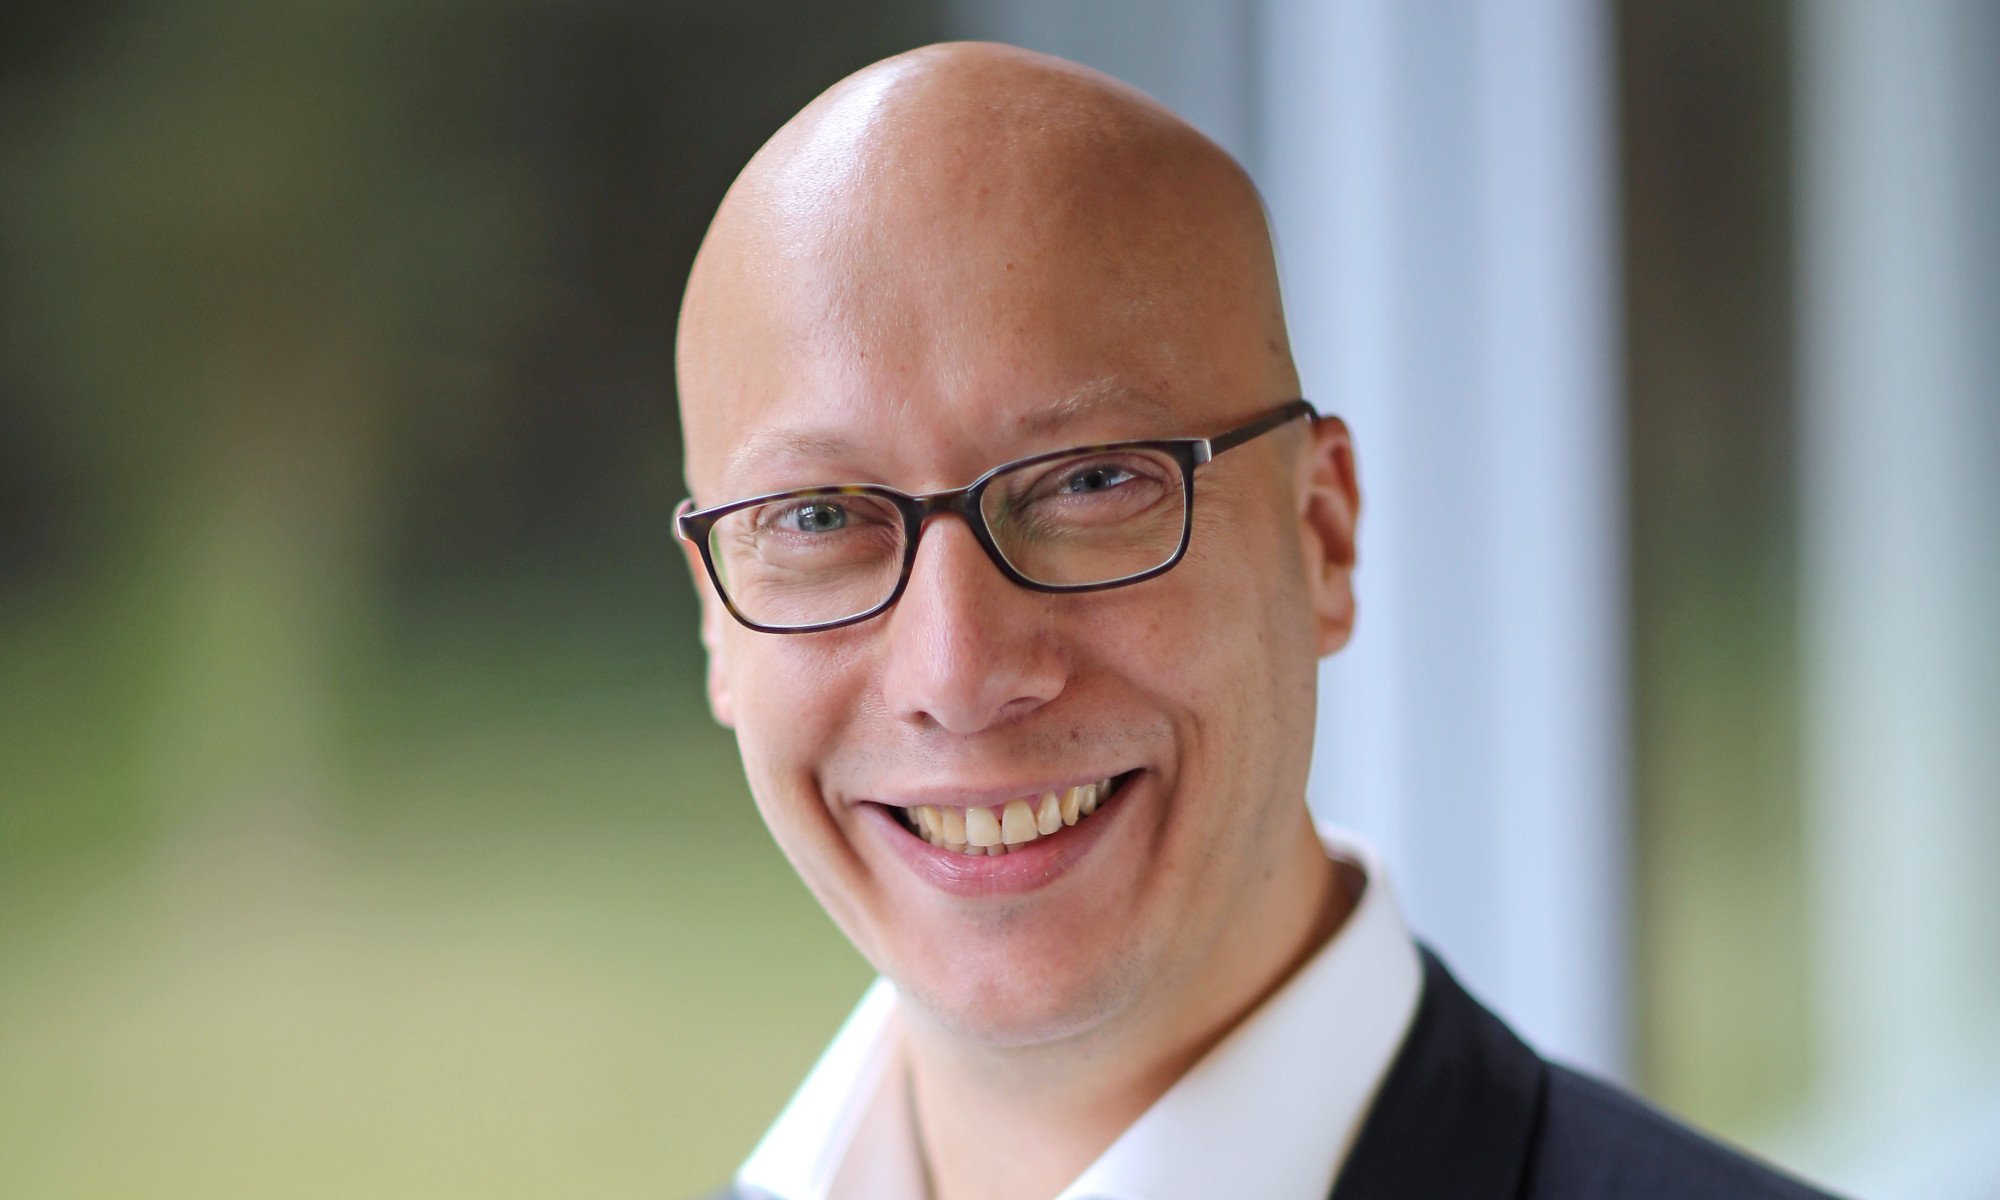 Meet Bastiaan van der Linden, the sustainability professor who bridges divides